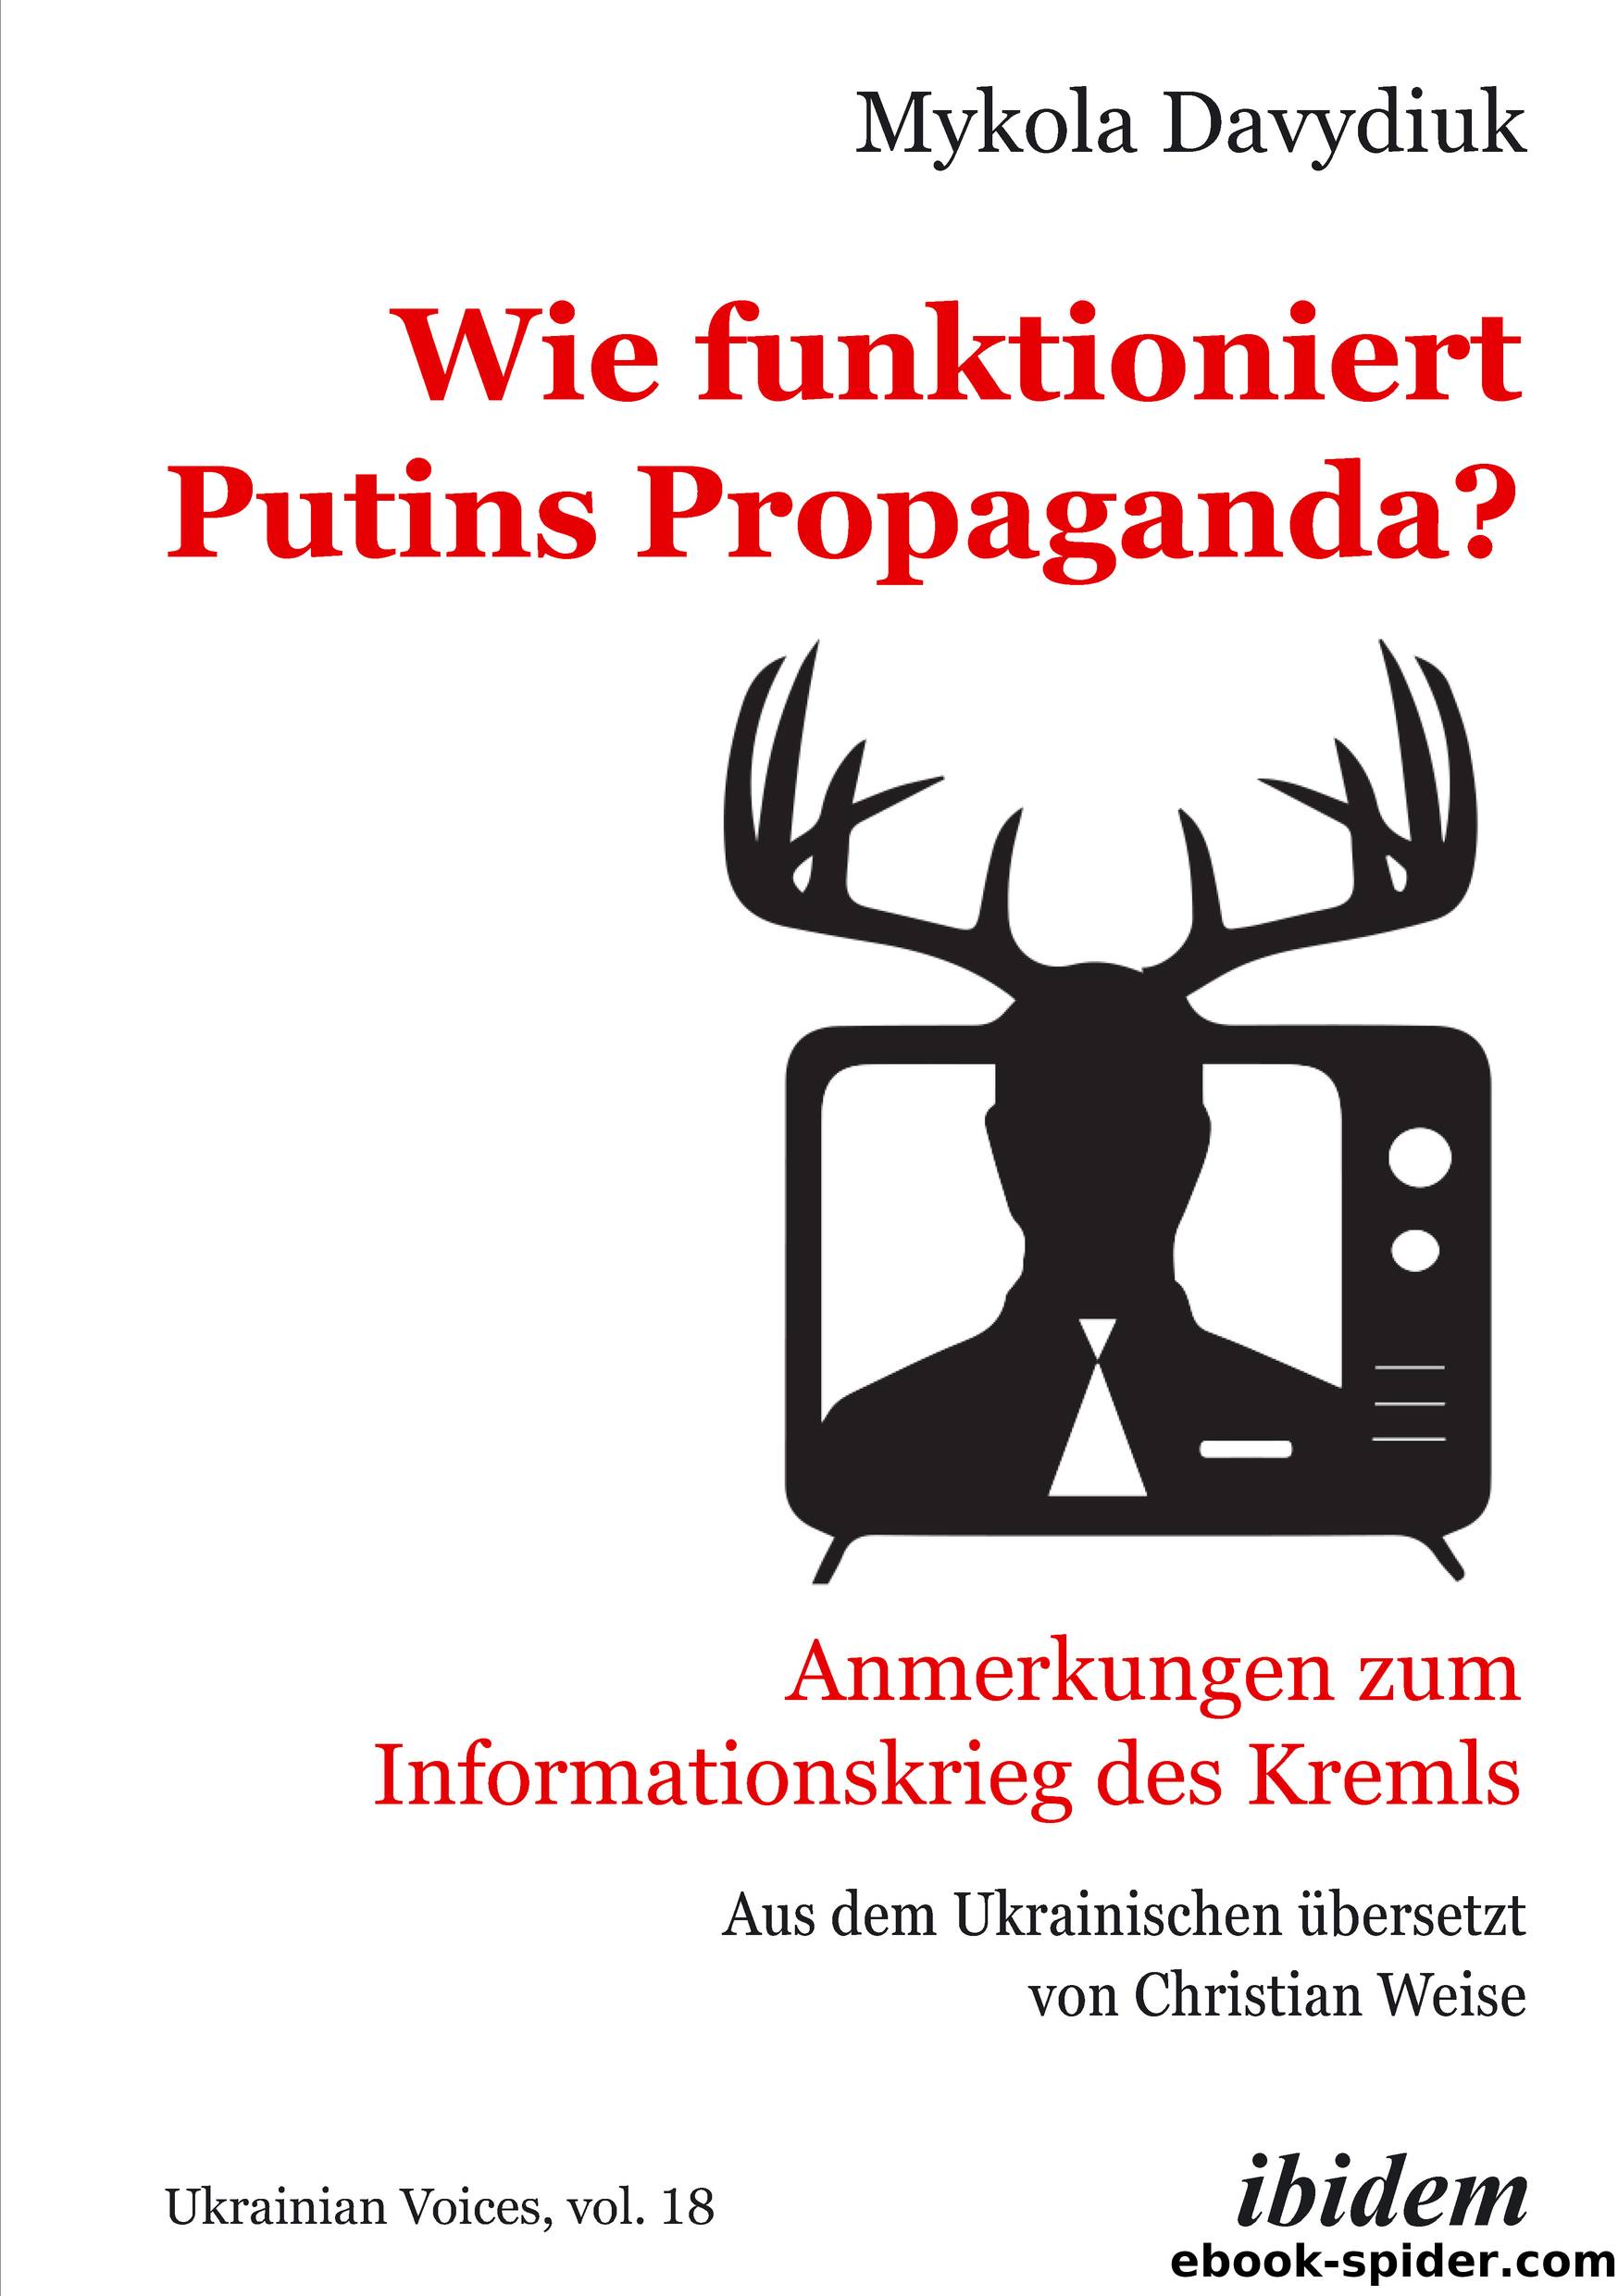 Wie funktioniert Putins Propaganda? by Mykola Davydiuk